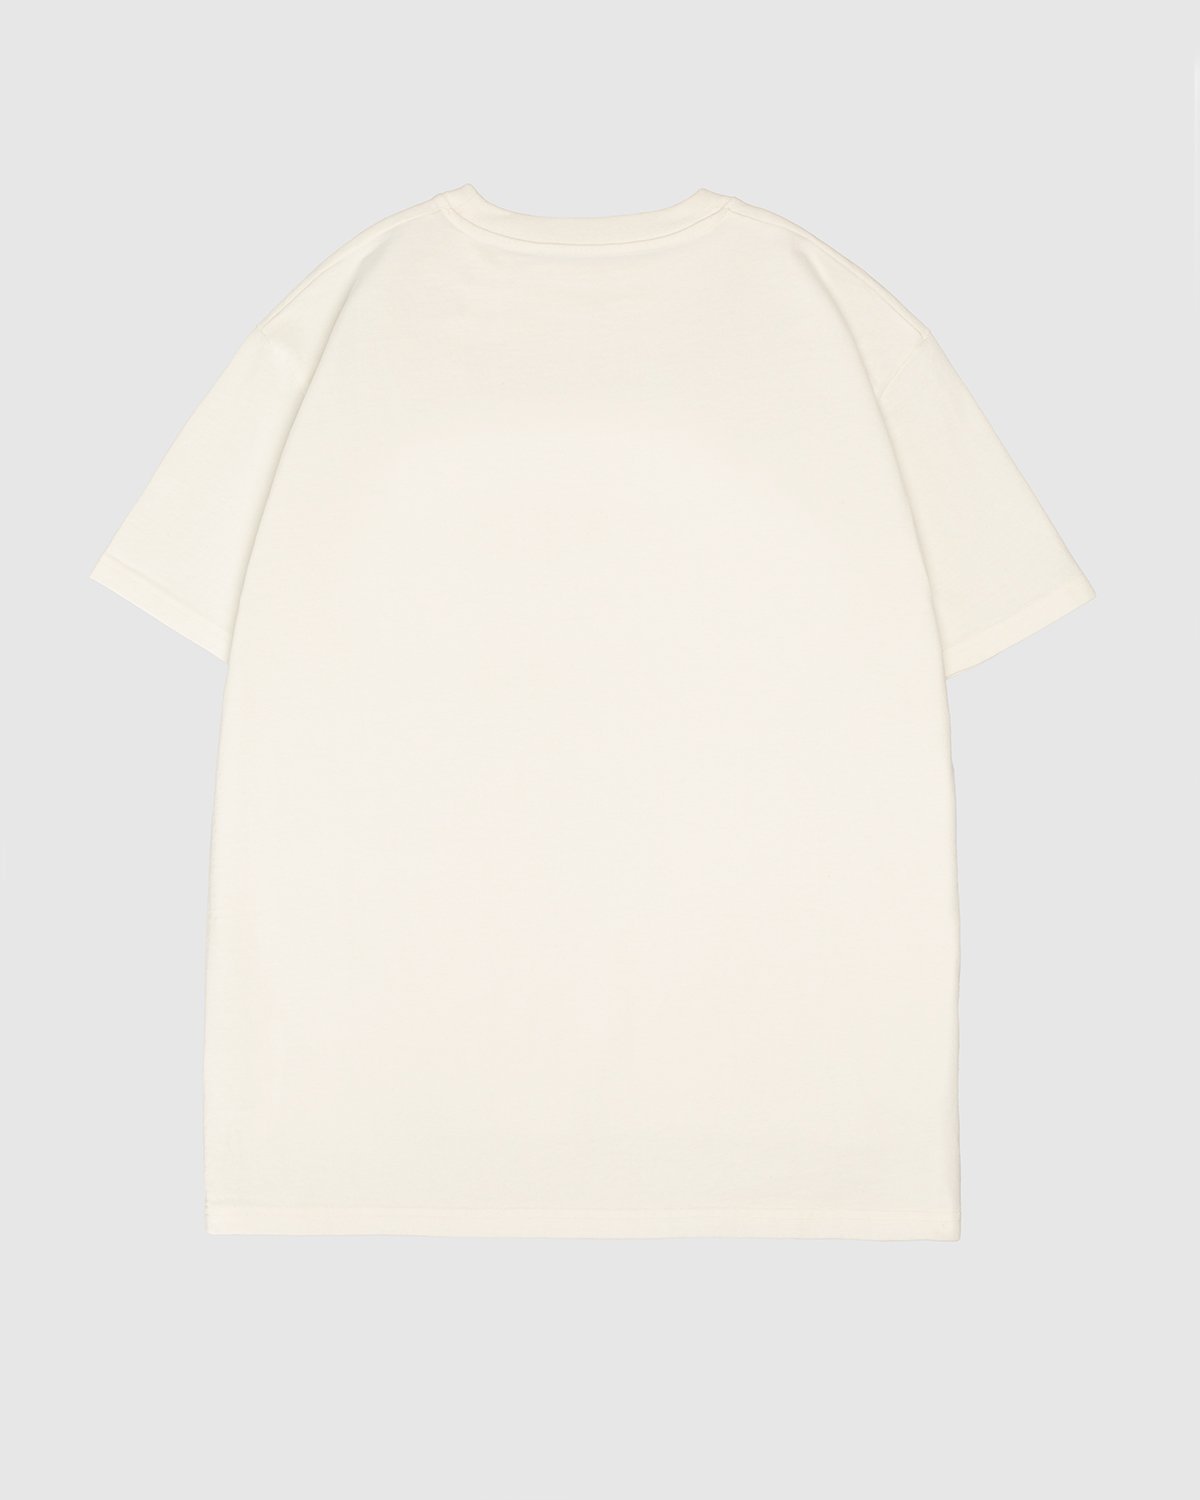 Highsnobiety - Not In Paris College Logo T-Shirt White - Clothing - White - Image 2